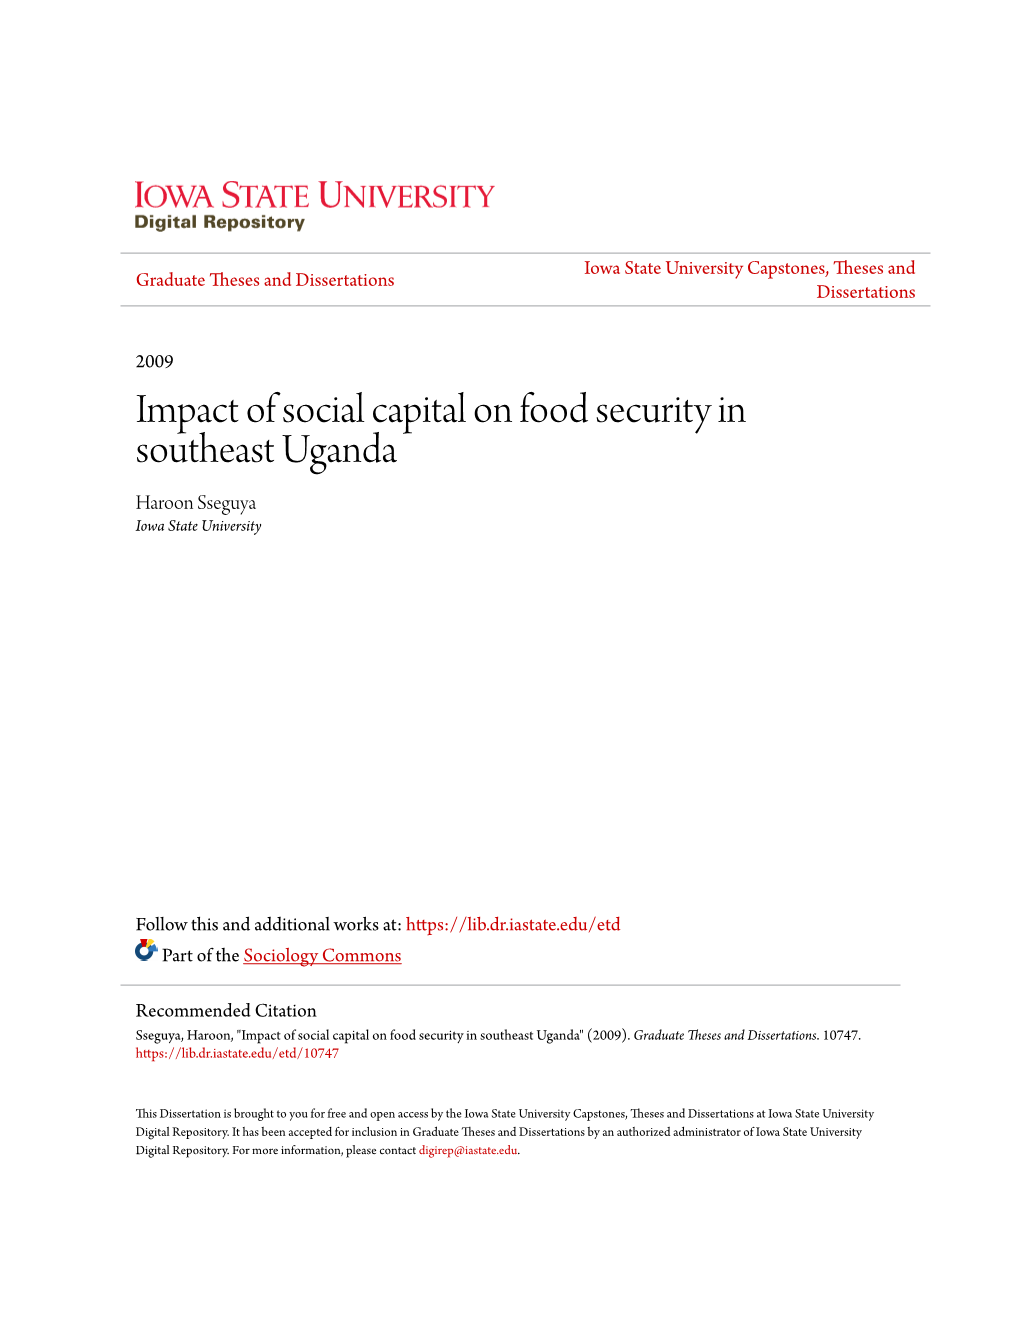 Impact of Social Capital on Food Security in Southeast Uganda Haroon Sseguya Iowa State University